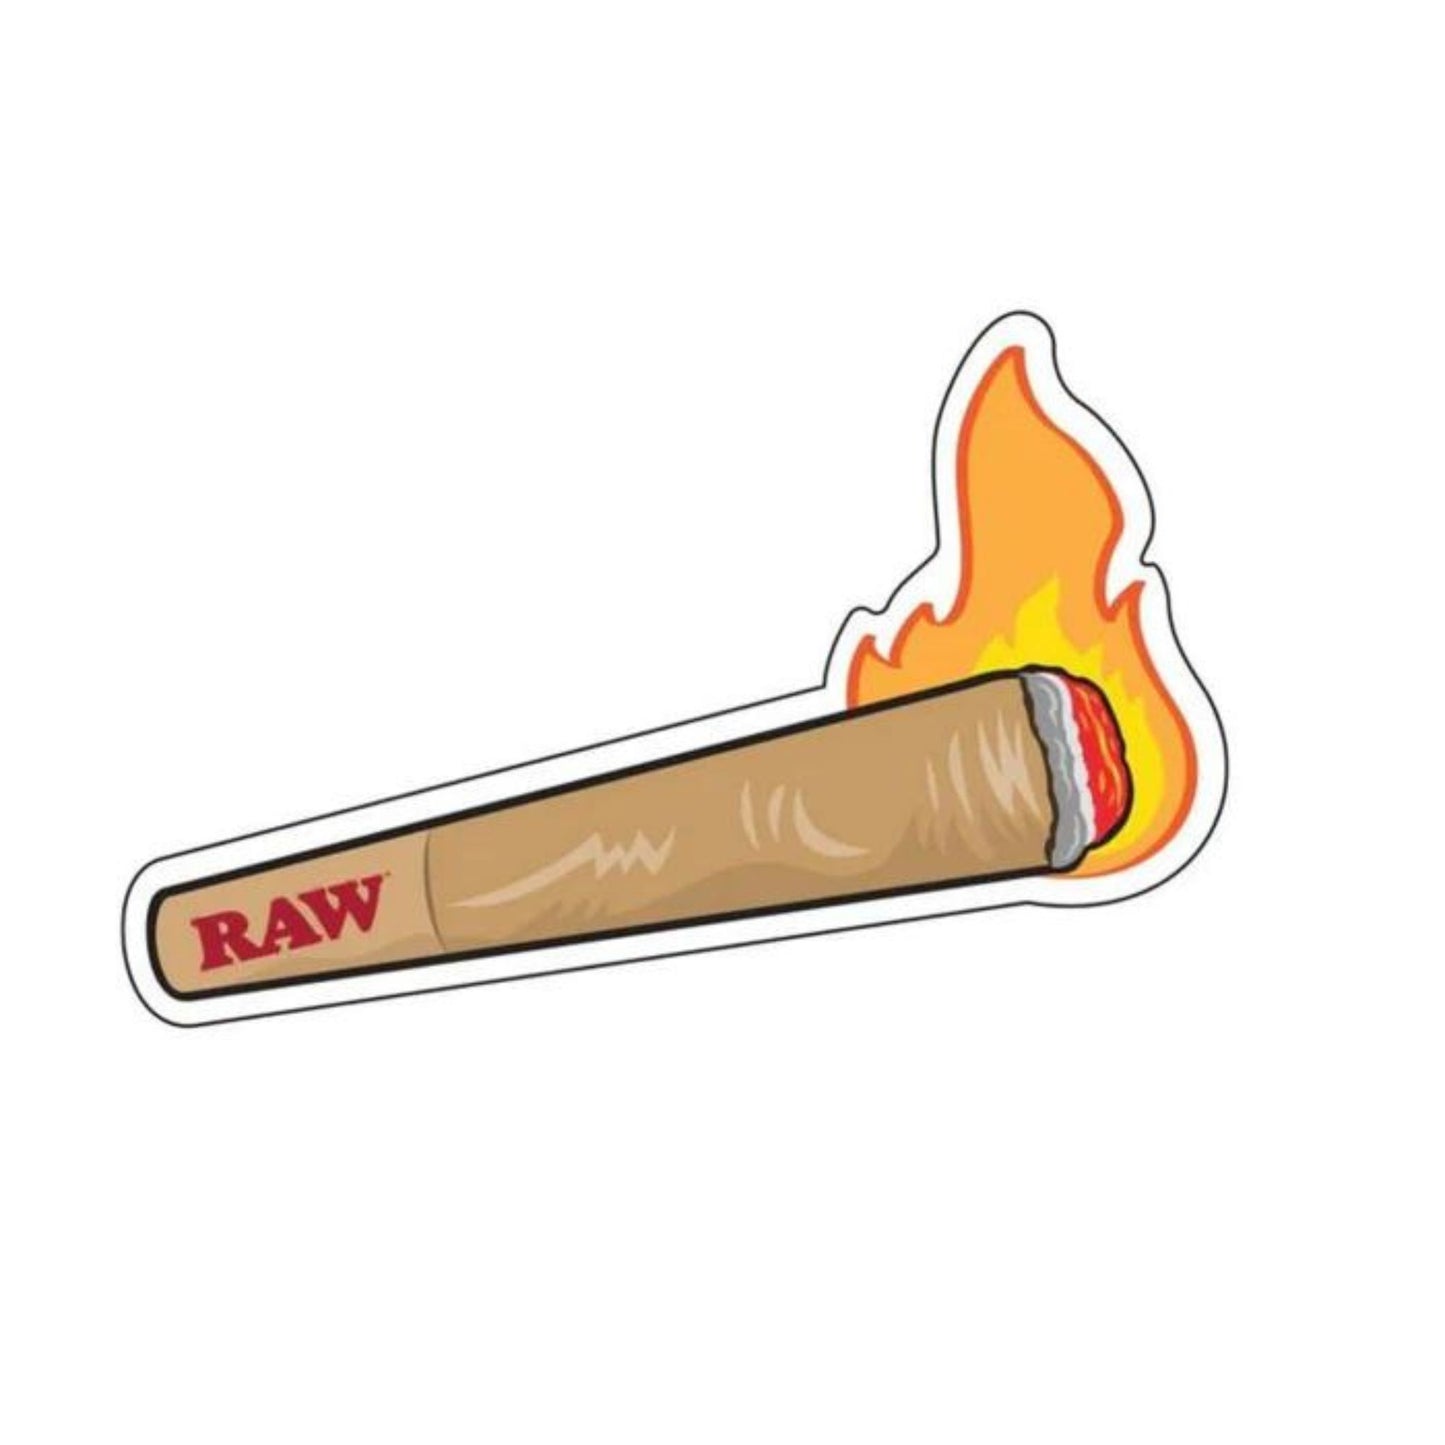 RAW Burning Cone Sticker